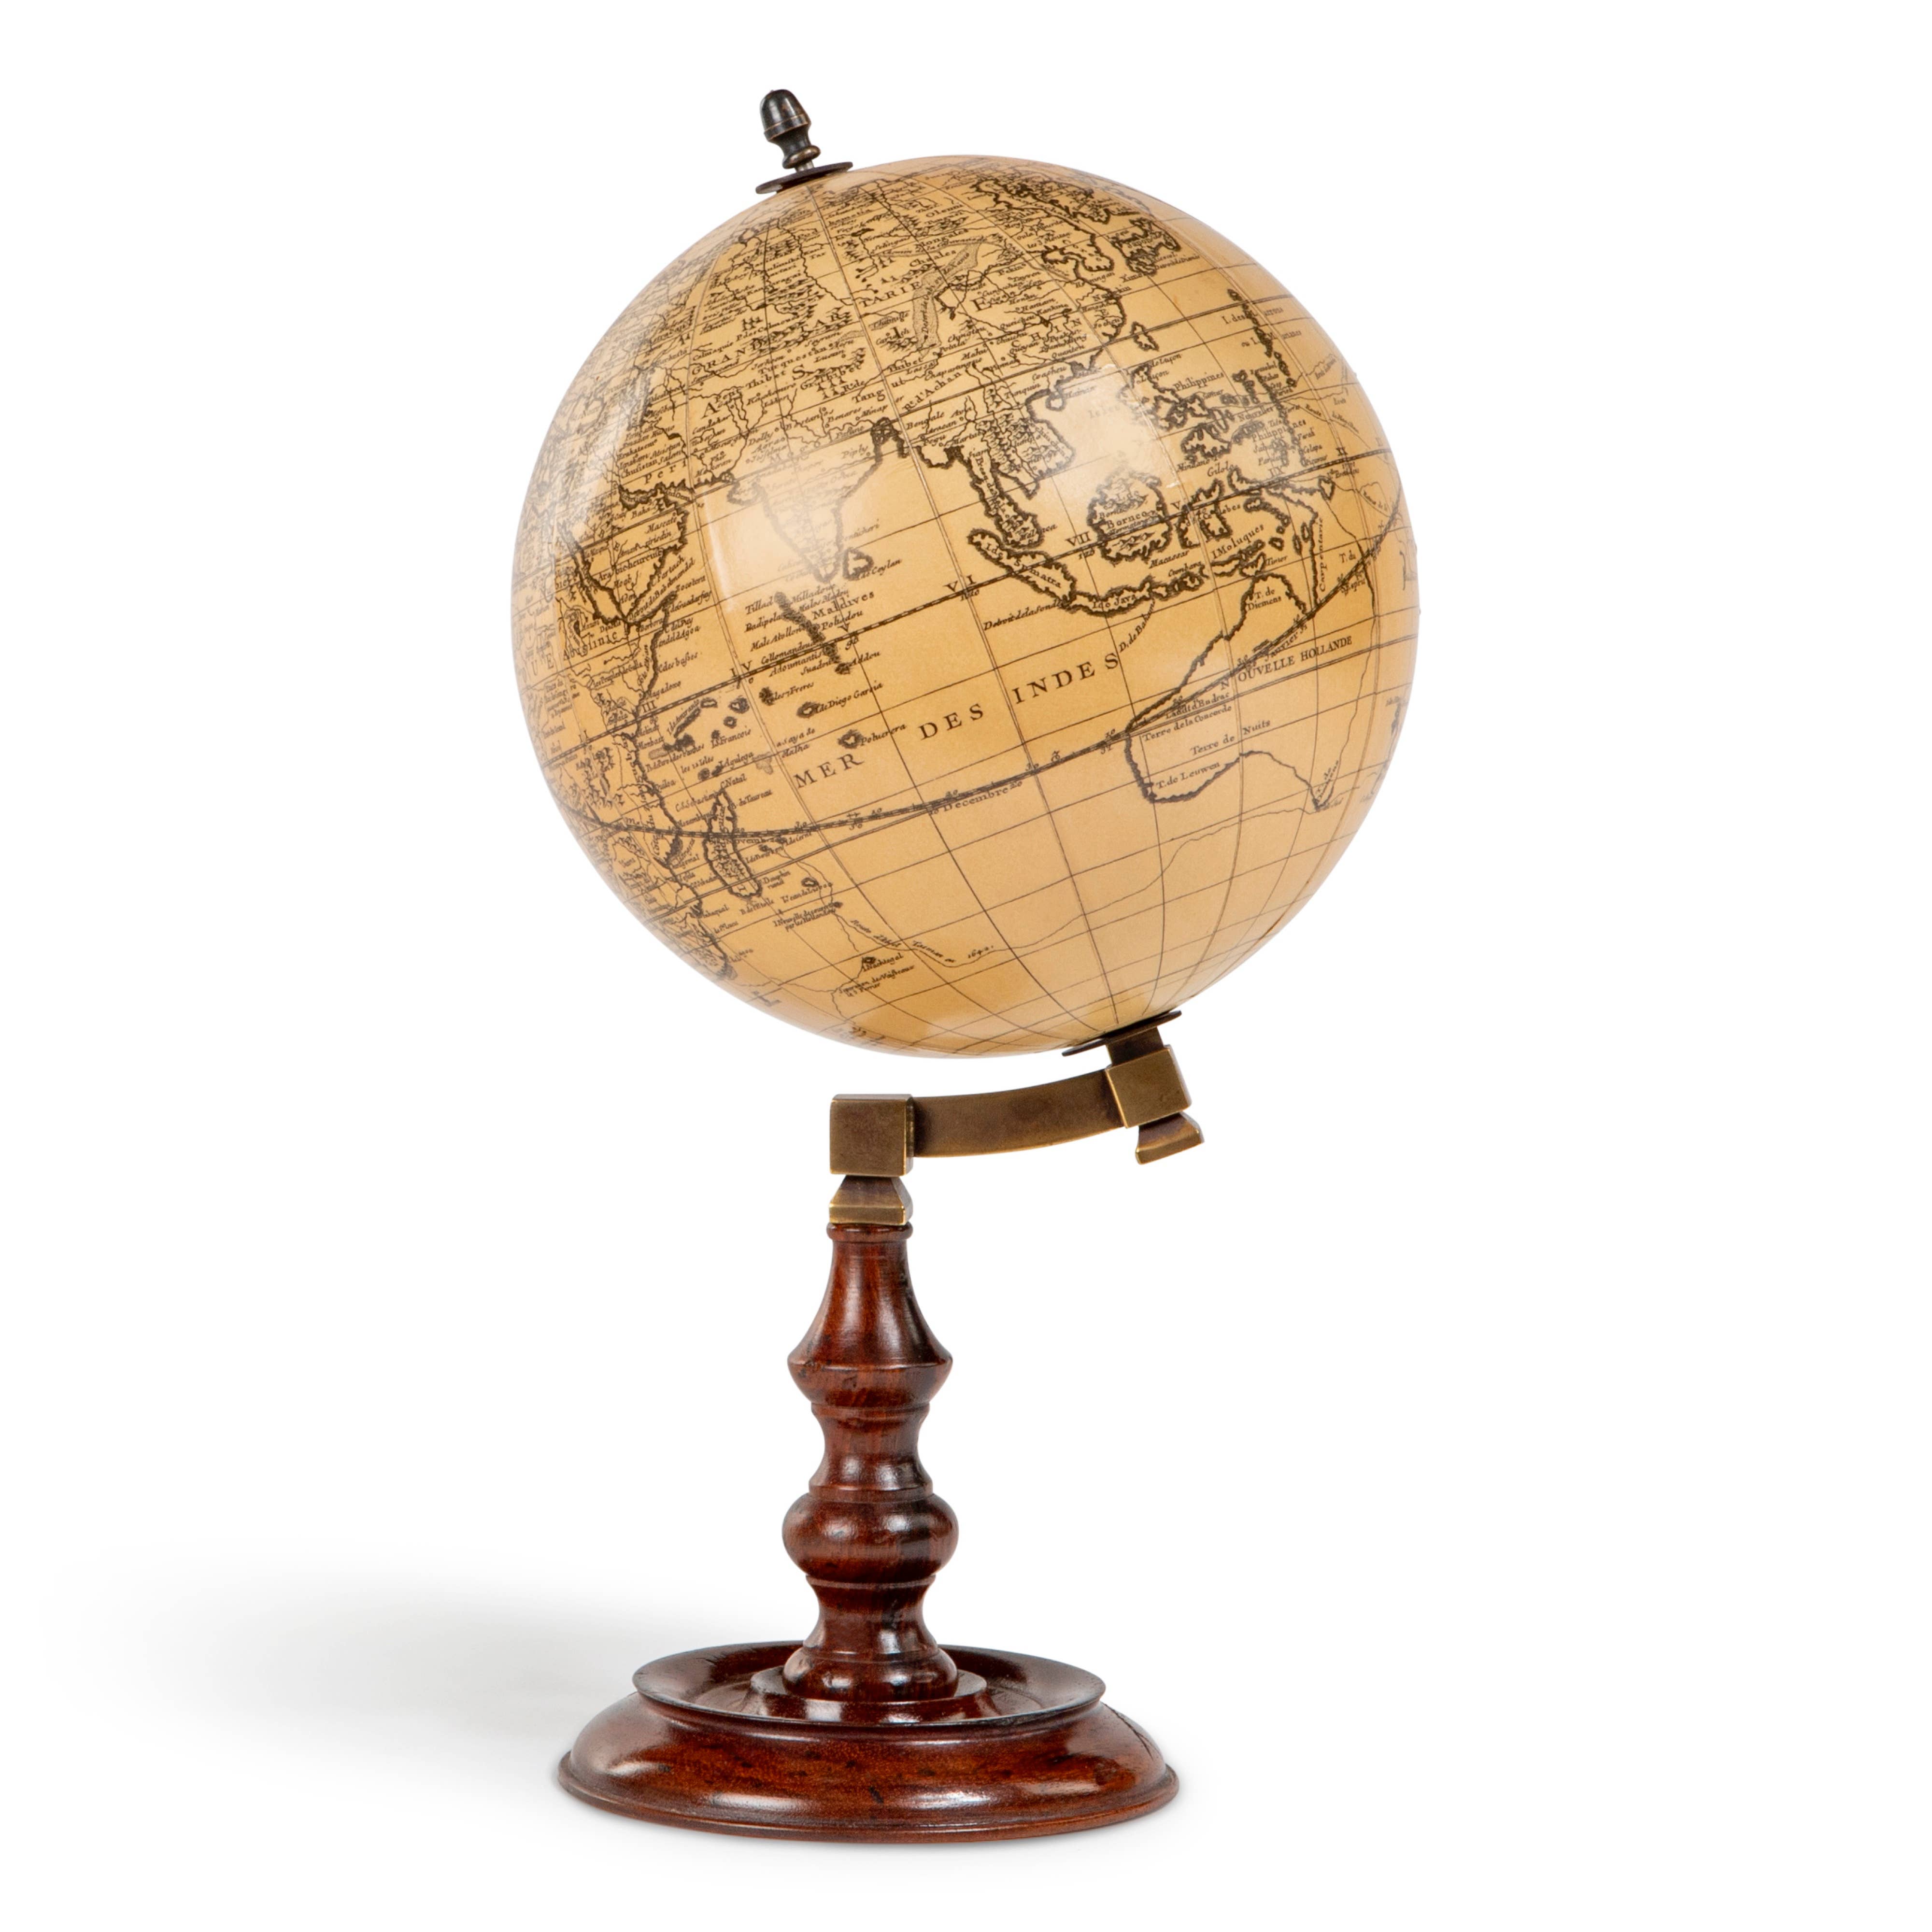 Authentic Models - Trianon Globe